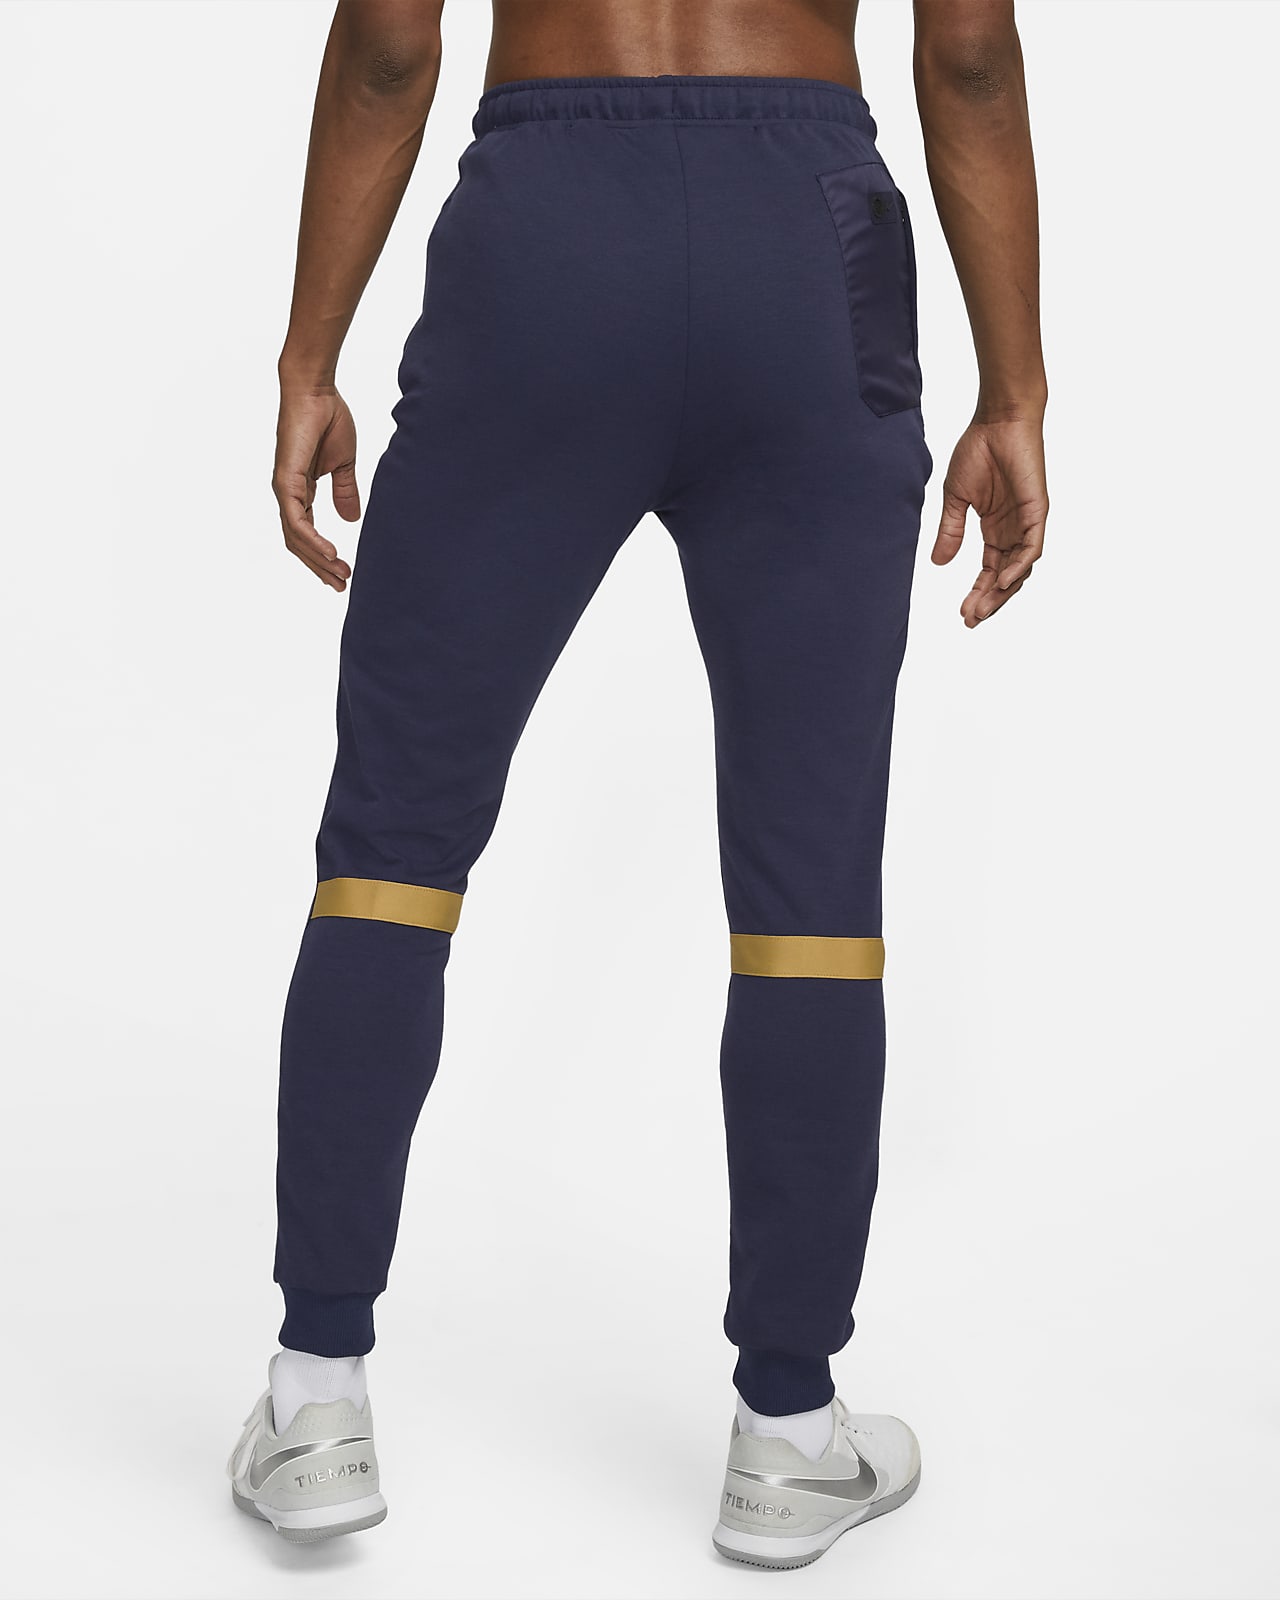 twist pols Uil Chelsea FC Men's Nike Dri-FIT Soccer Pants. Nike.com